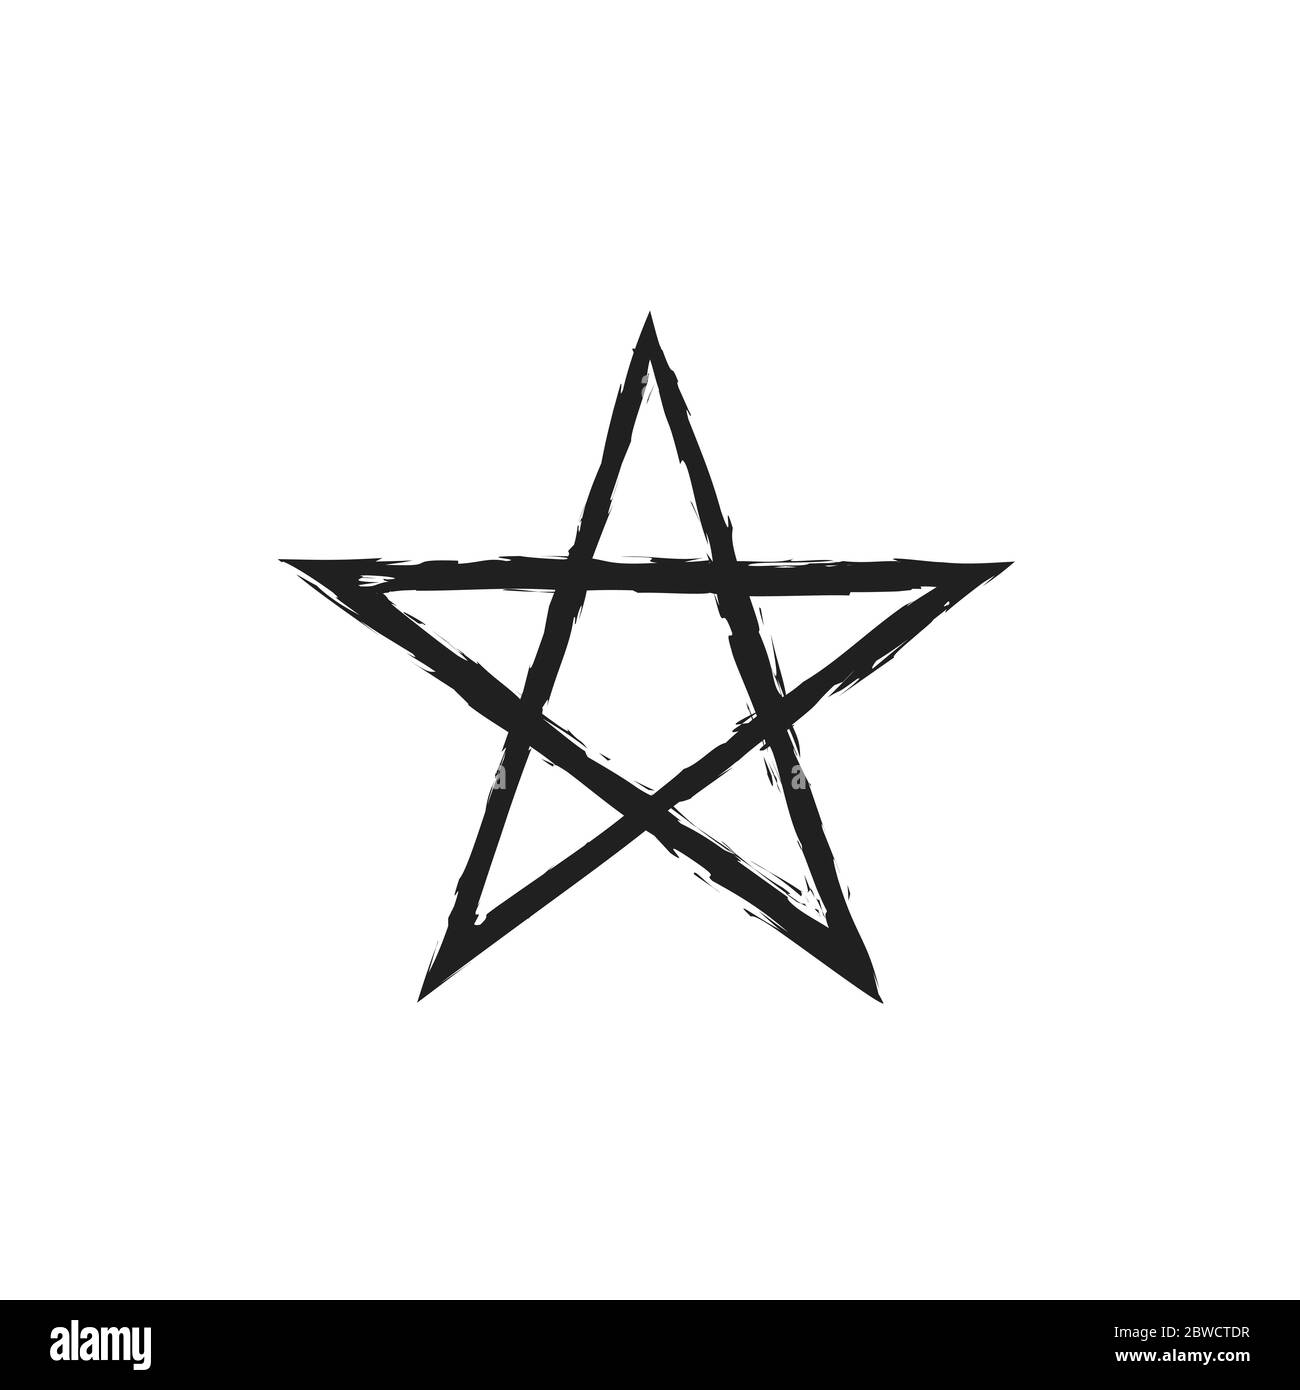 Grunge linear star. Stock vector illustration isolated on white background. Stock Vector